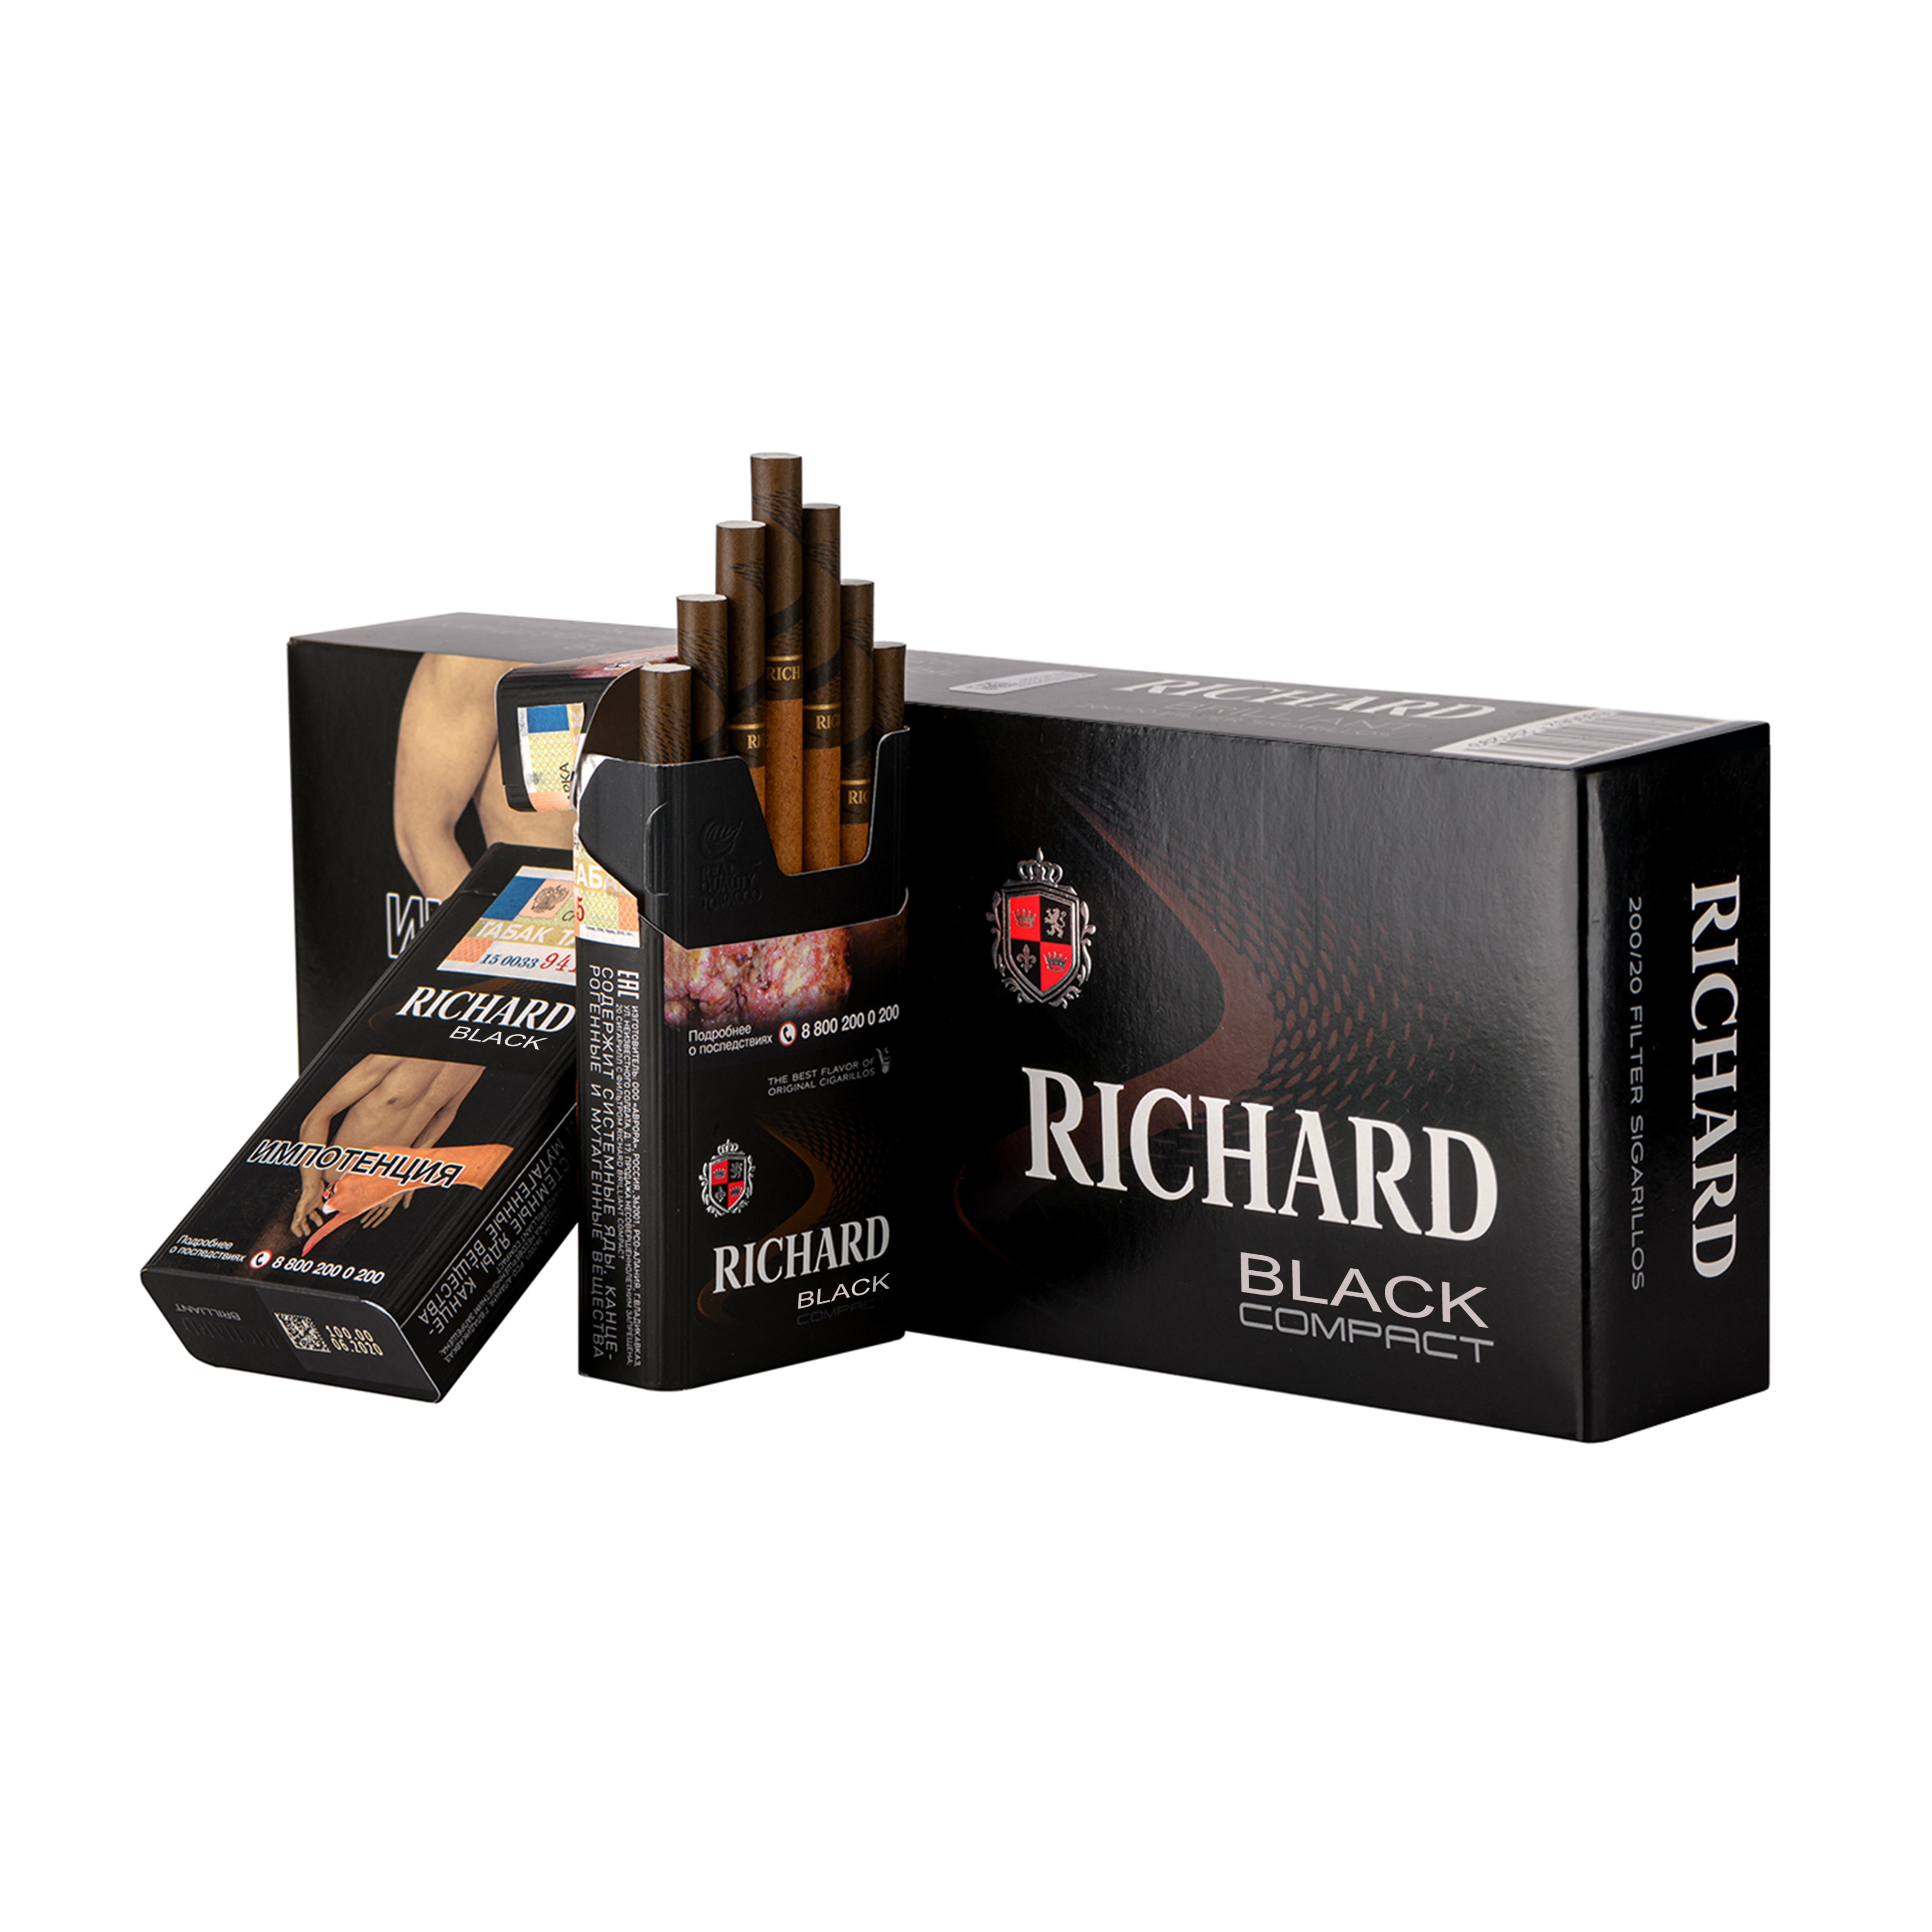 Блэк компакт. Сигареты Richard Black Compact. Сигариллы Richard Black Compact.